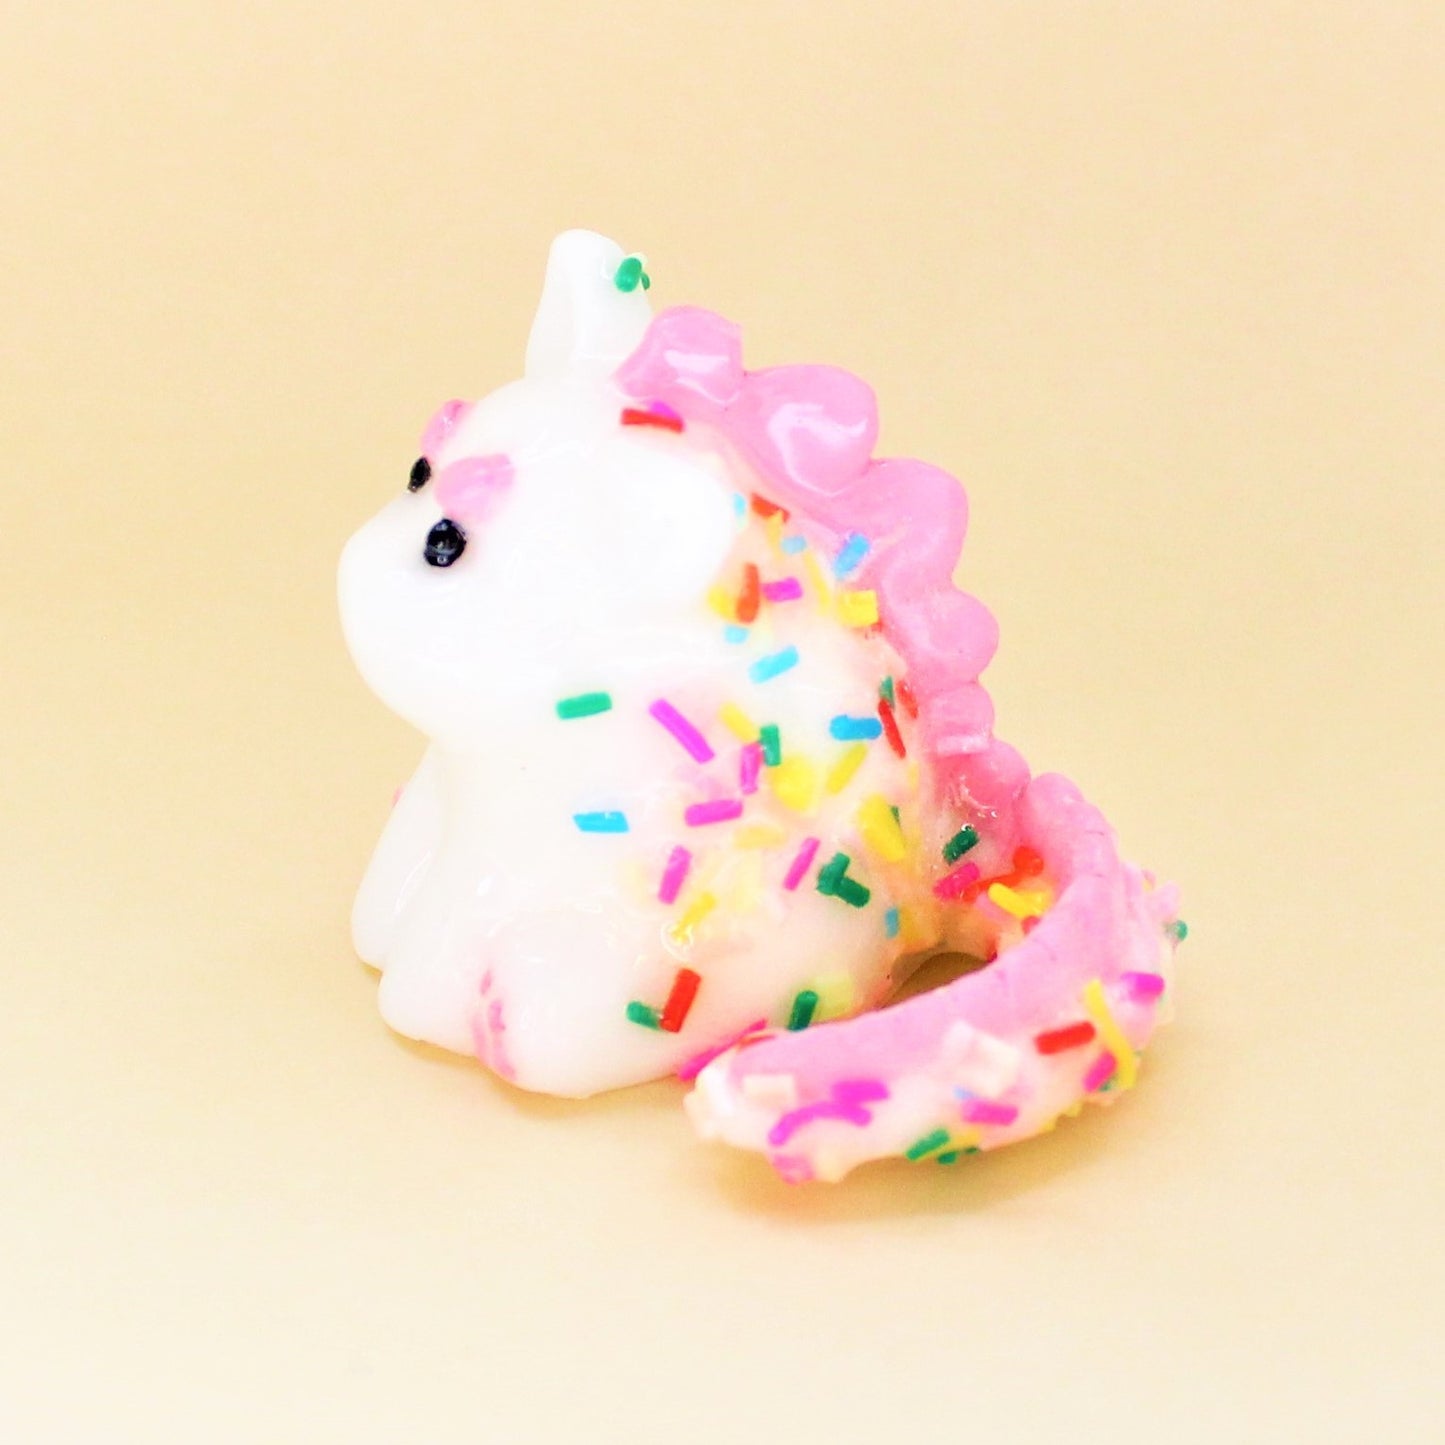 Dinocat Pink Ice Cream Sprinkle Figure / Handmade Resin Art Toy Mini Fig / Adorable Cat Dinosaur / Desk Decoration Collectable / Chibi